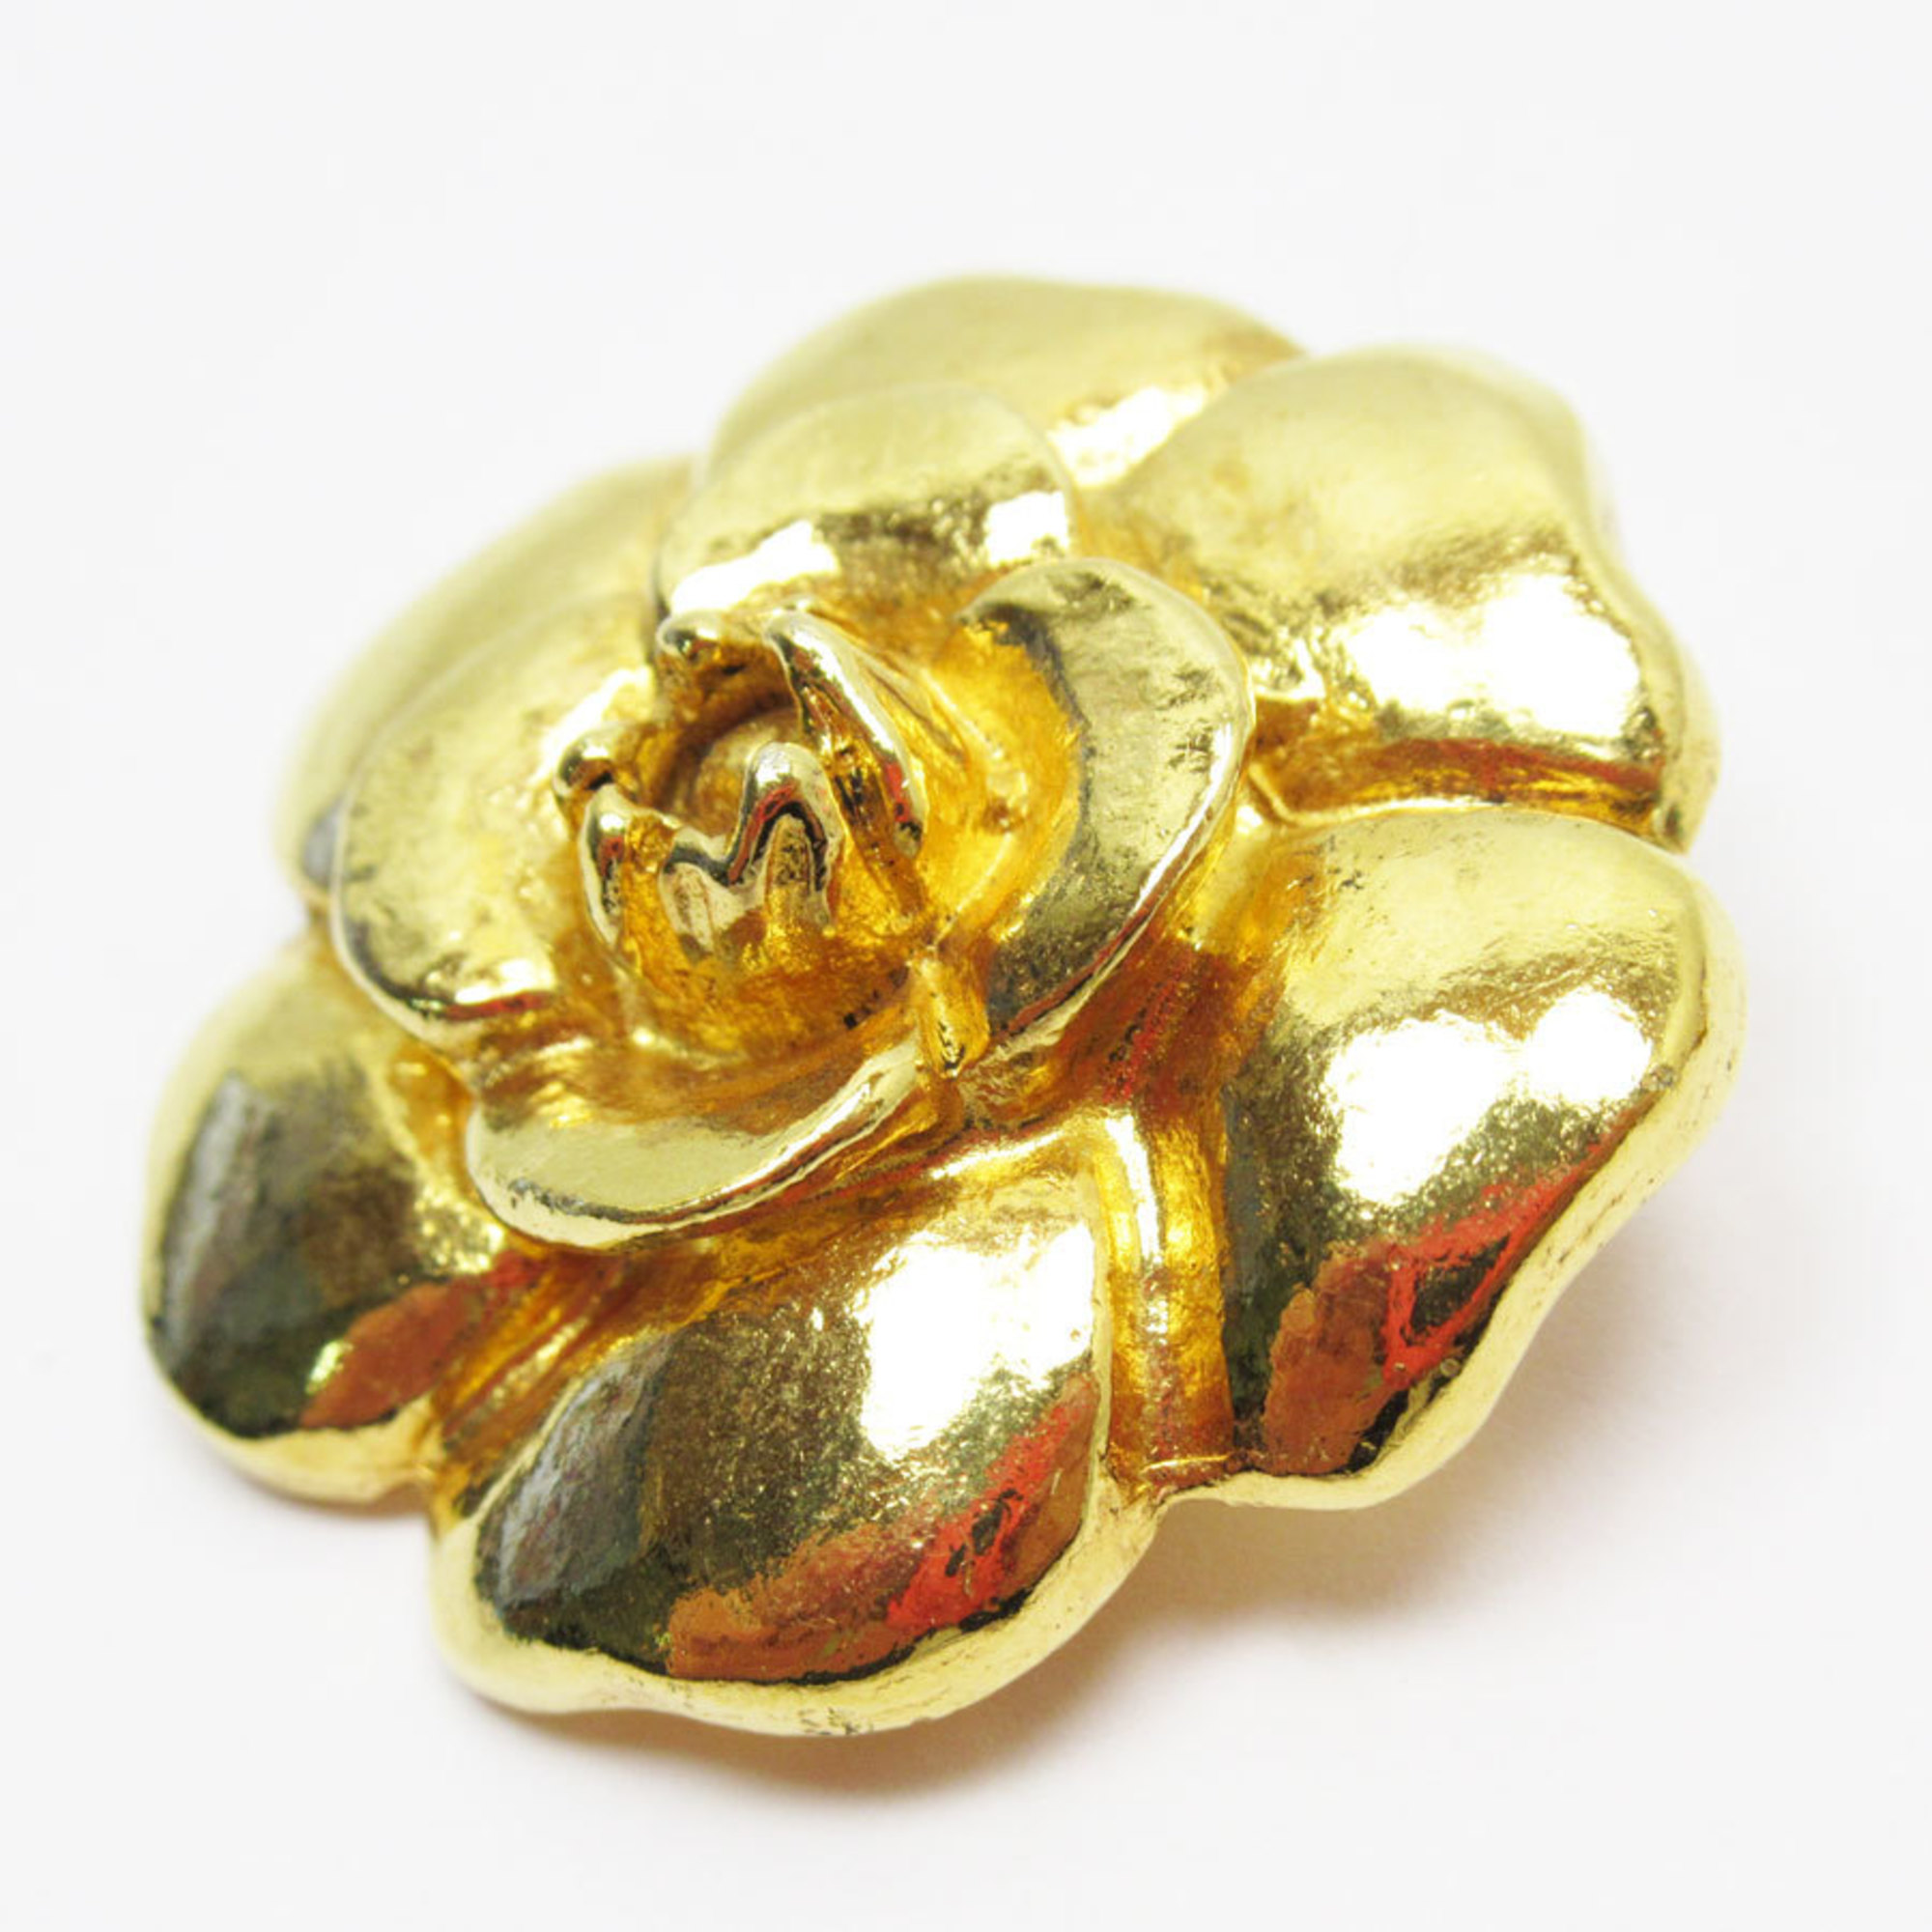 CHANEL Camellia Metal Gold Earrings for Women